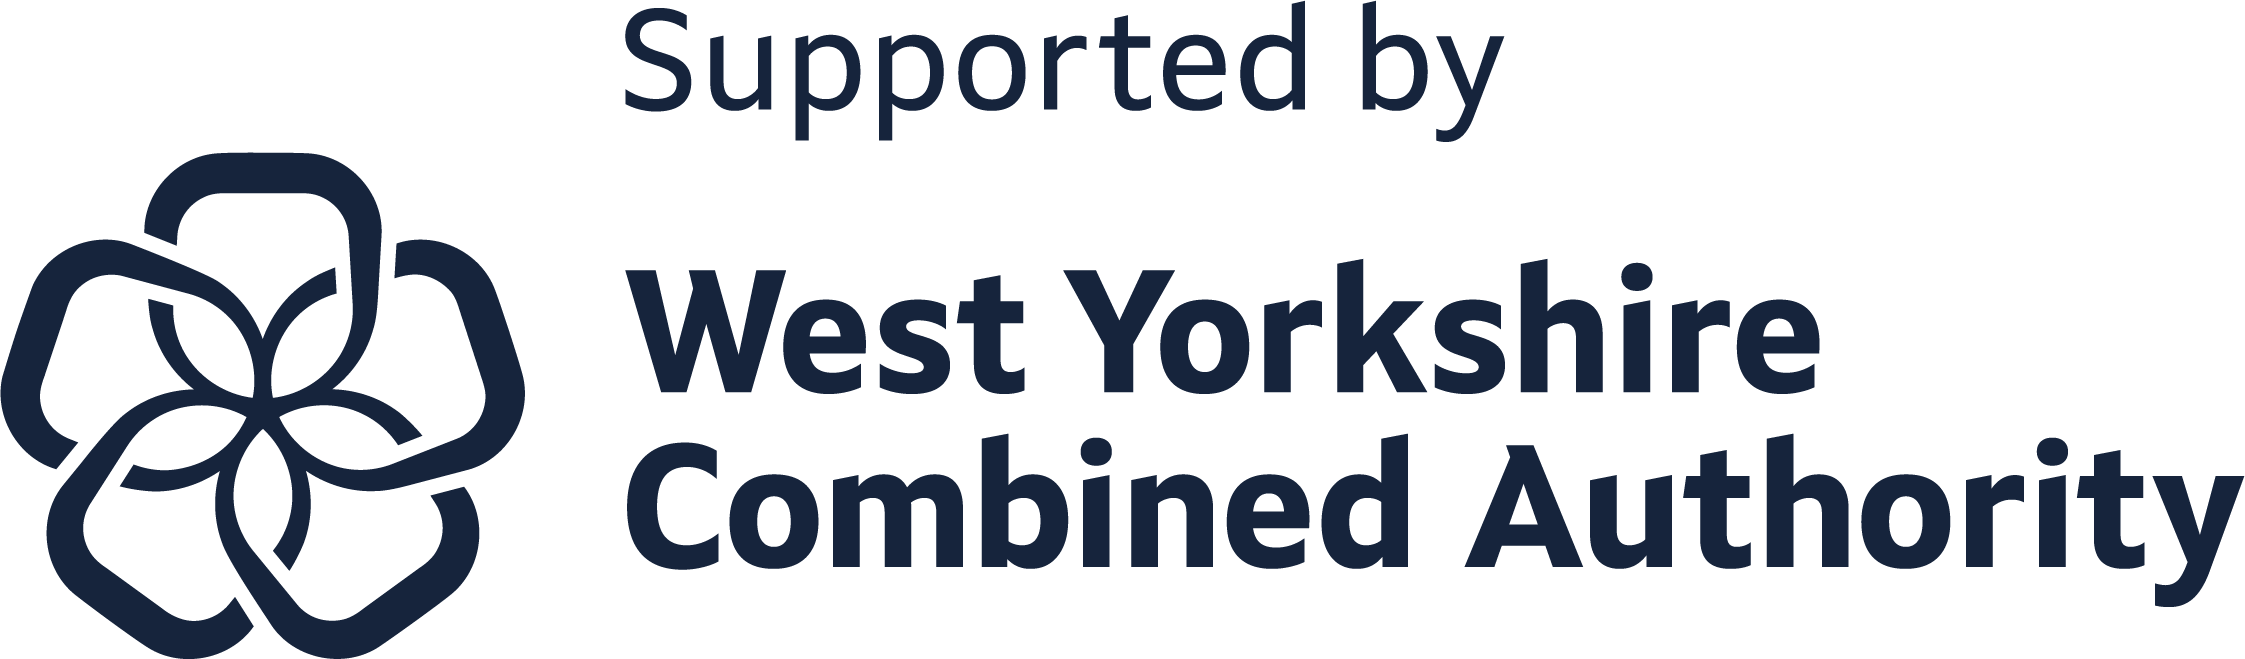 West Yorkshire Business logo